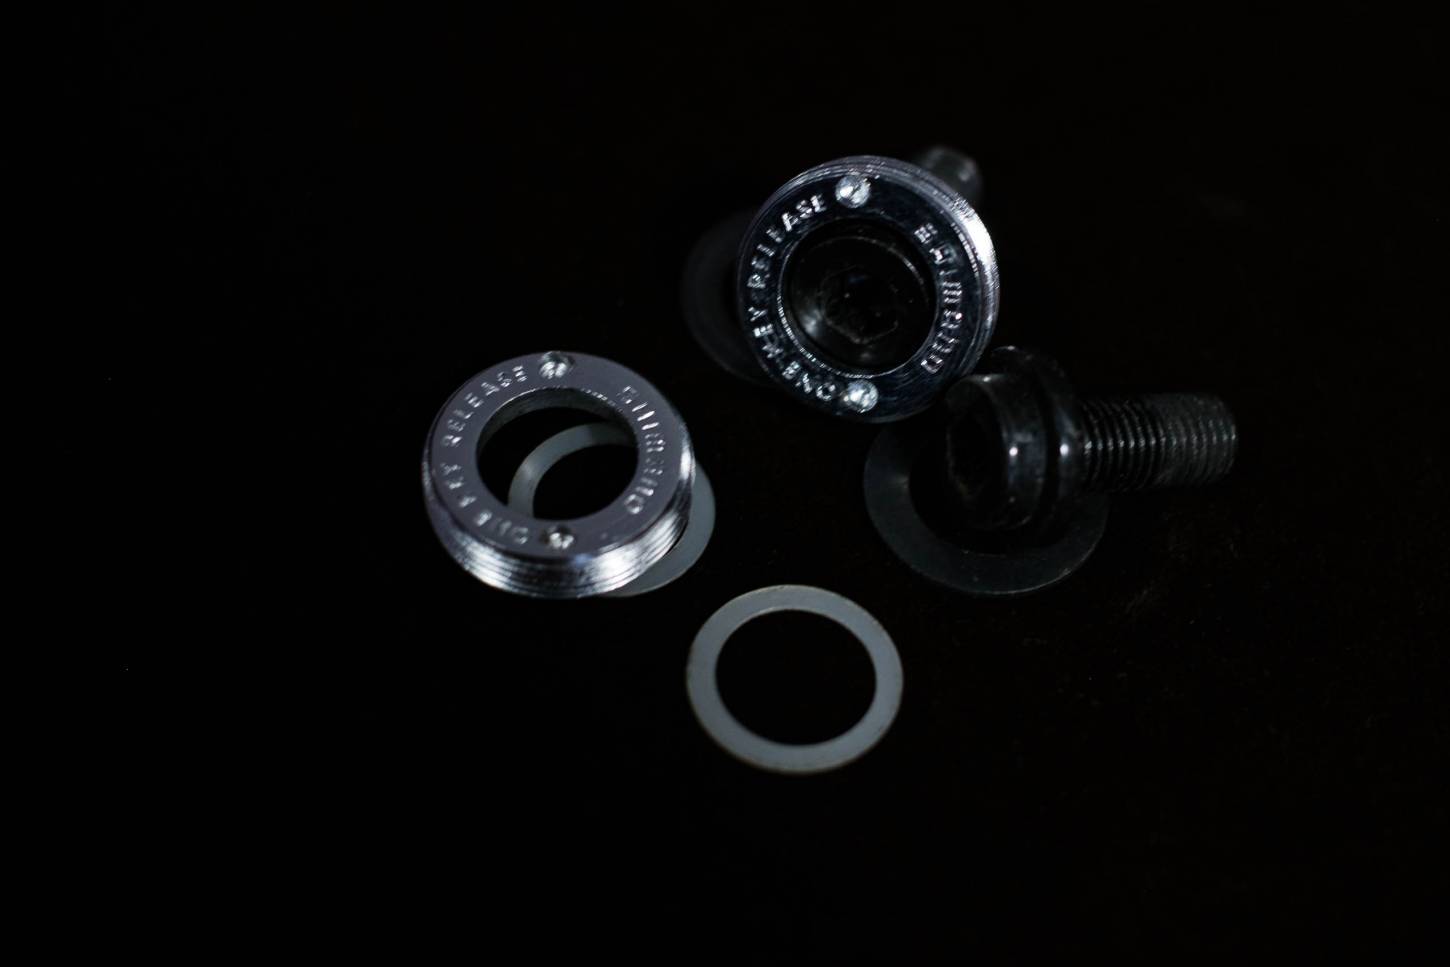 NOS Shimano 600 DX crank screws Dust Caps silver Crank Caps + Bolts 1 key release Vintage